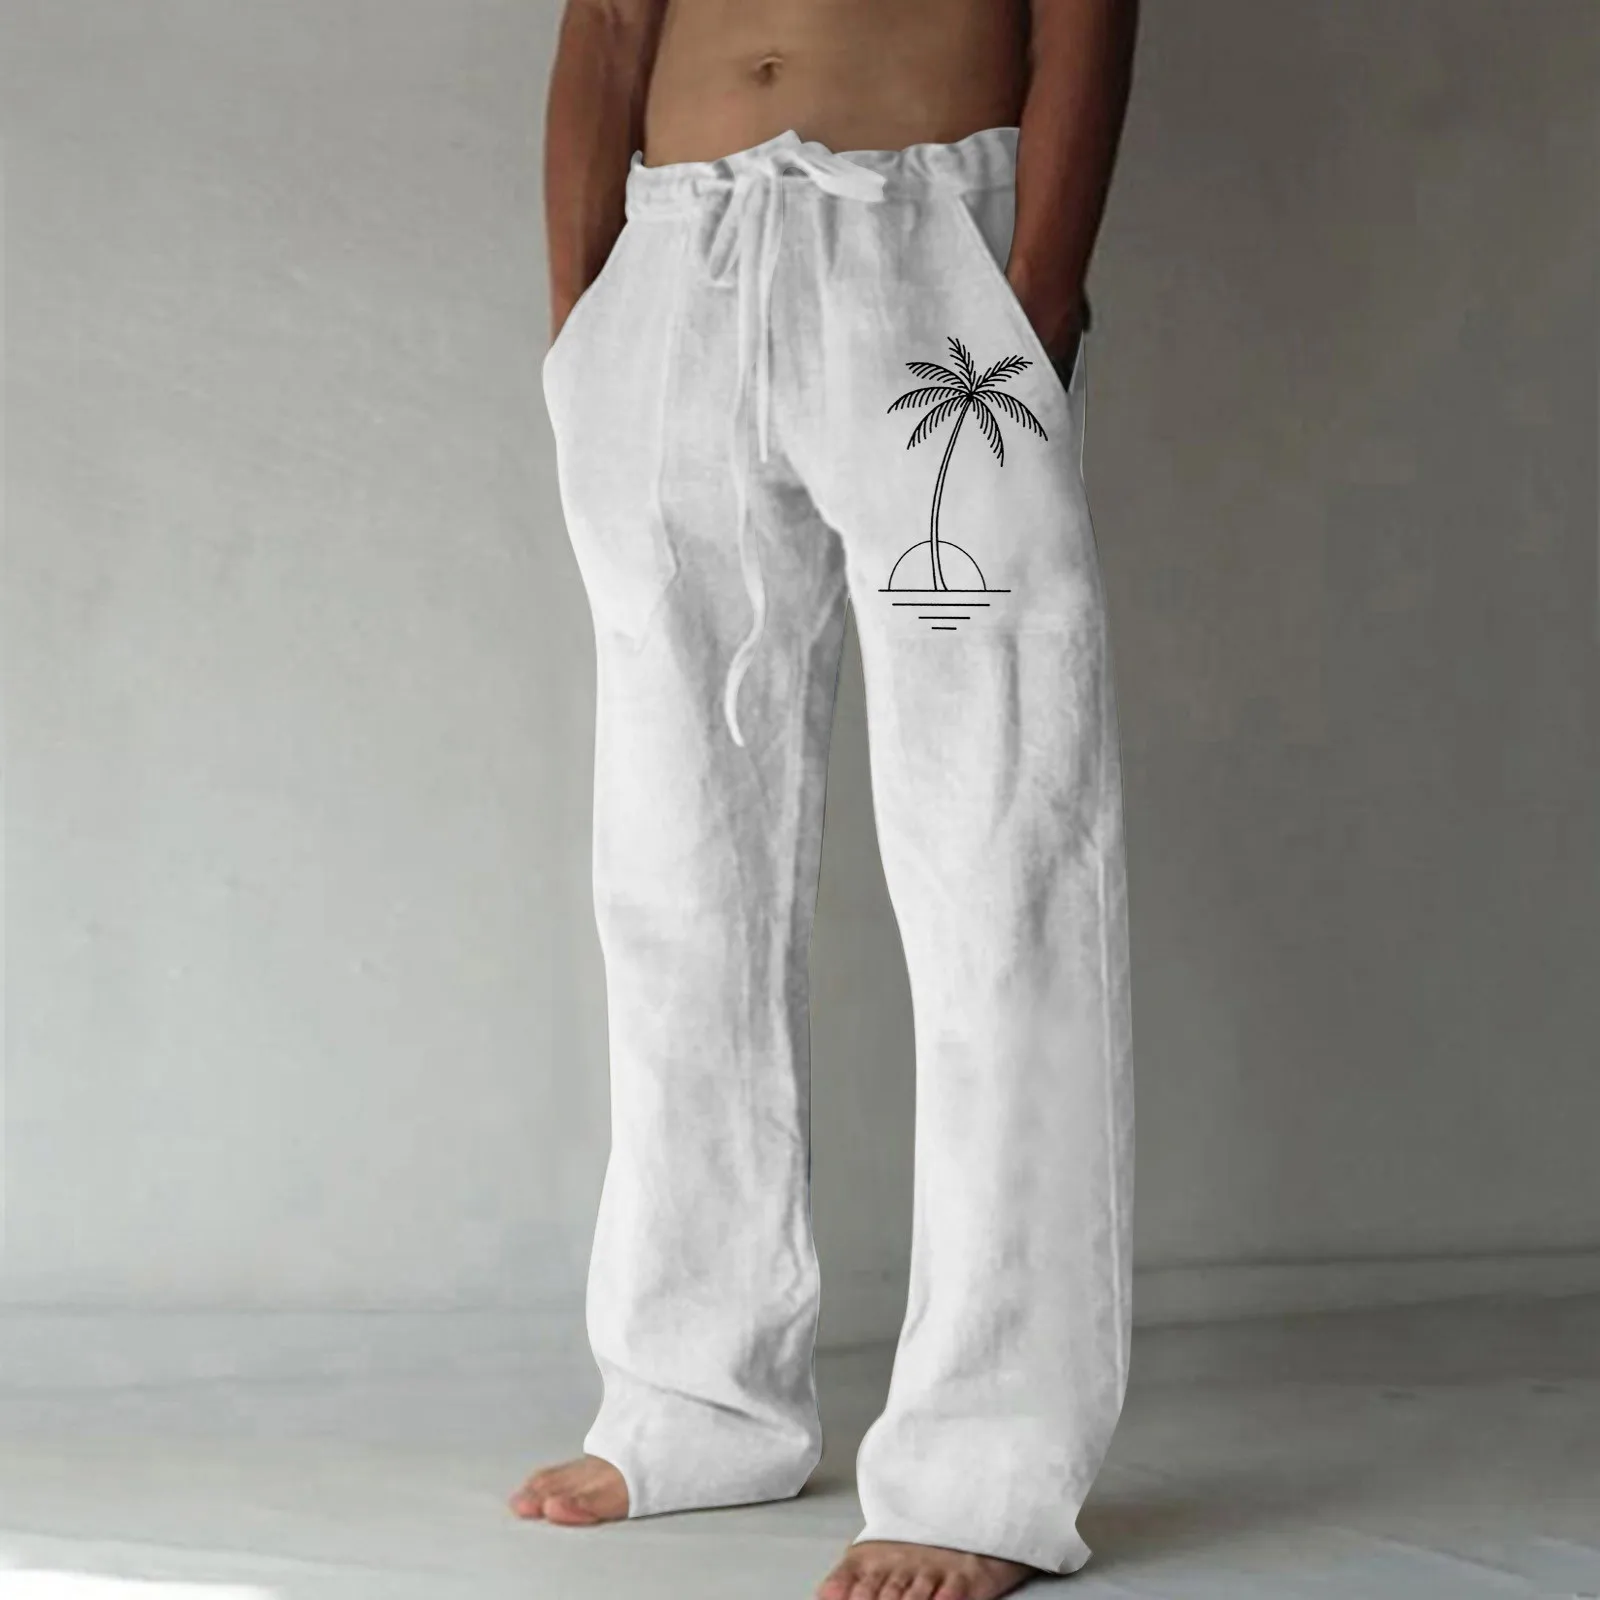 

Men Casual Pants Coconut-Tree Print Summer Imitation Cotton Linen Pants Mid Waist Drawstring Trousers Streetwear Bottoms Lounge